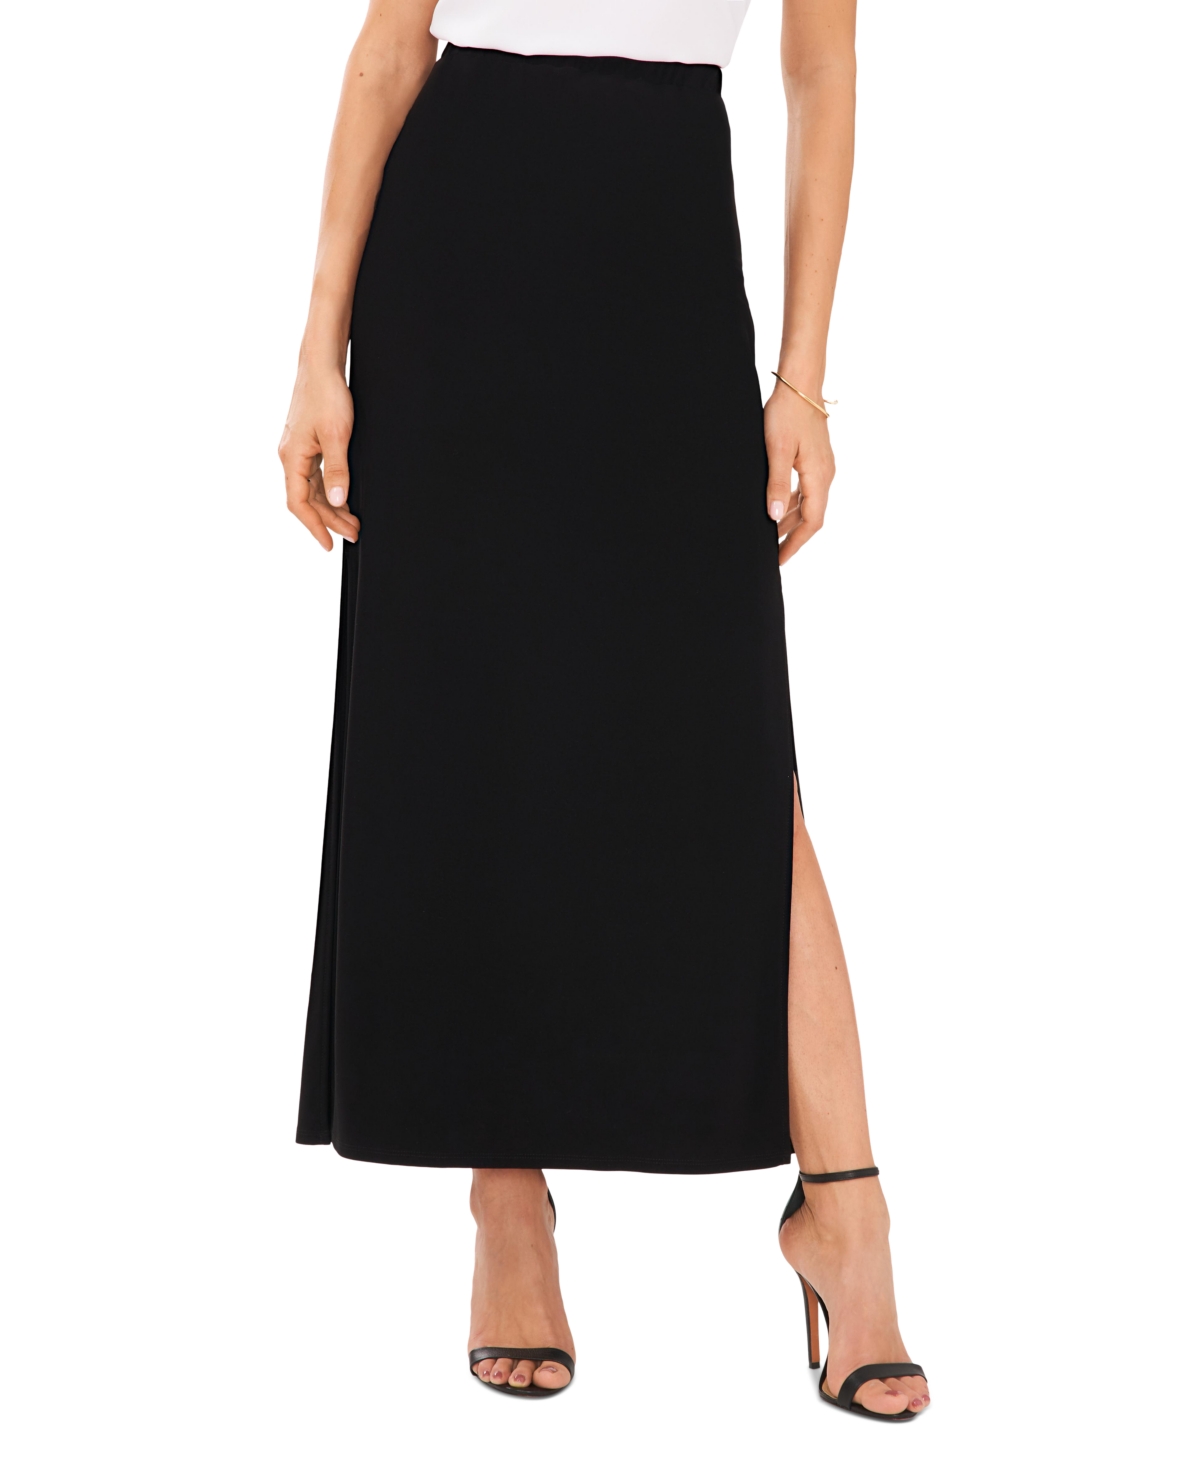 Women's A-Line Side Slit Maxi Skirt - Rich Black